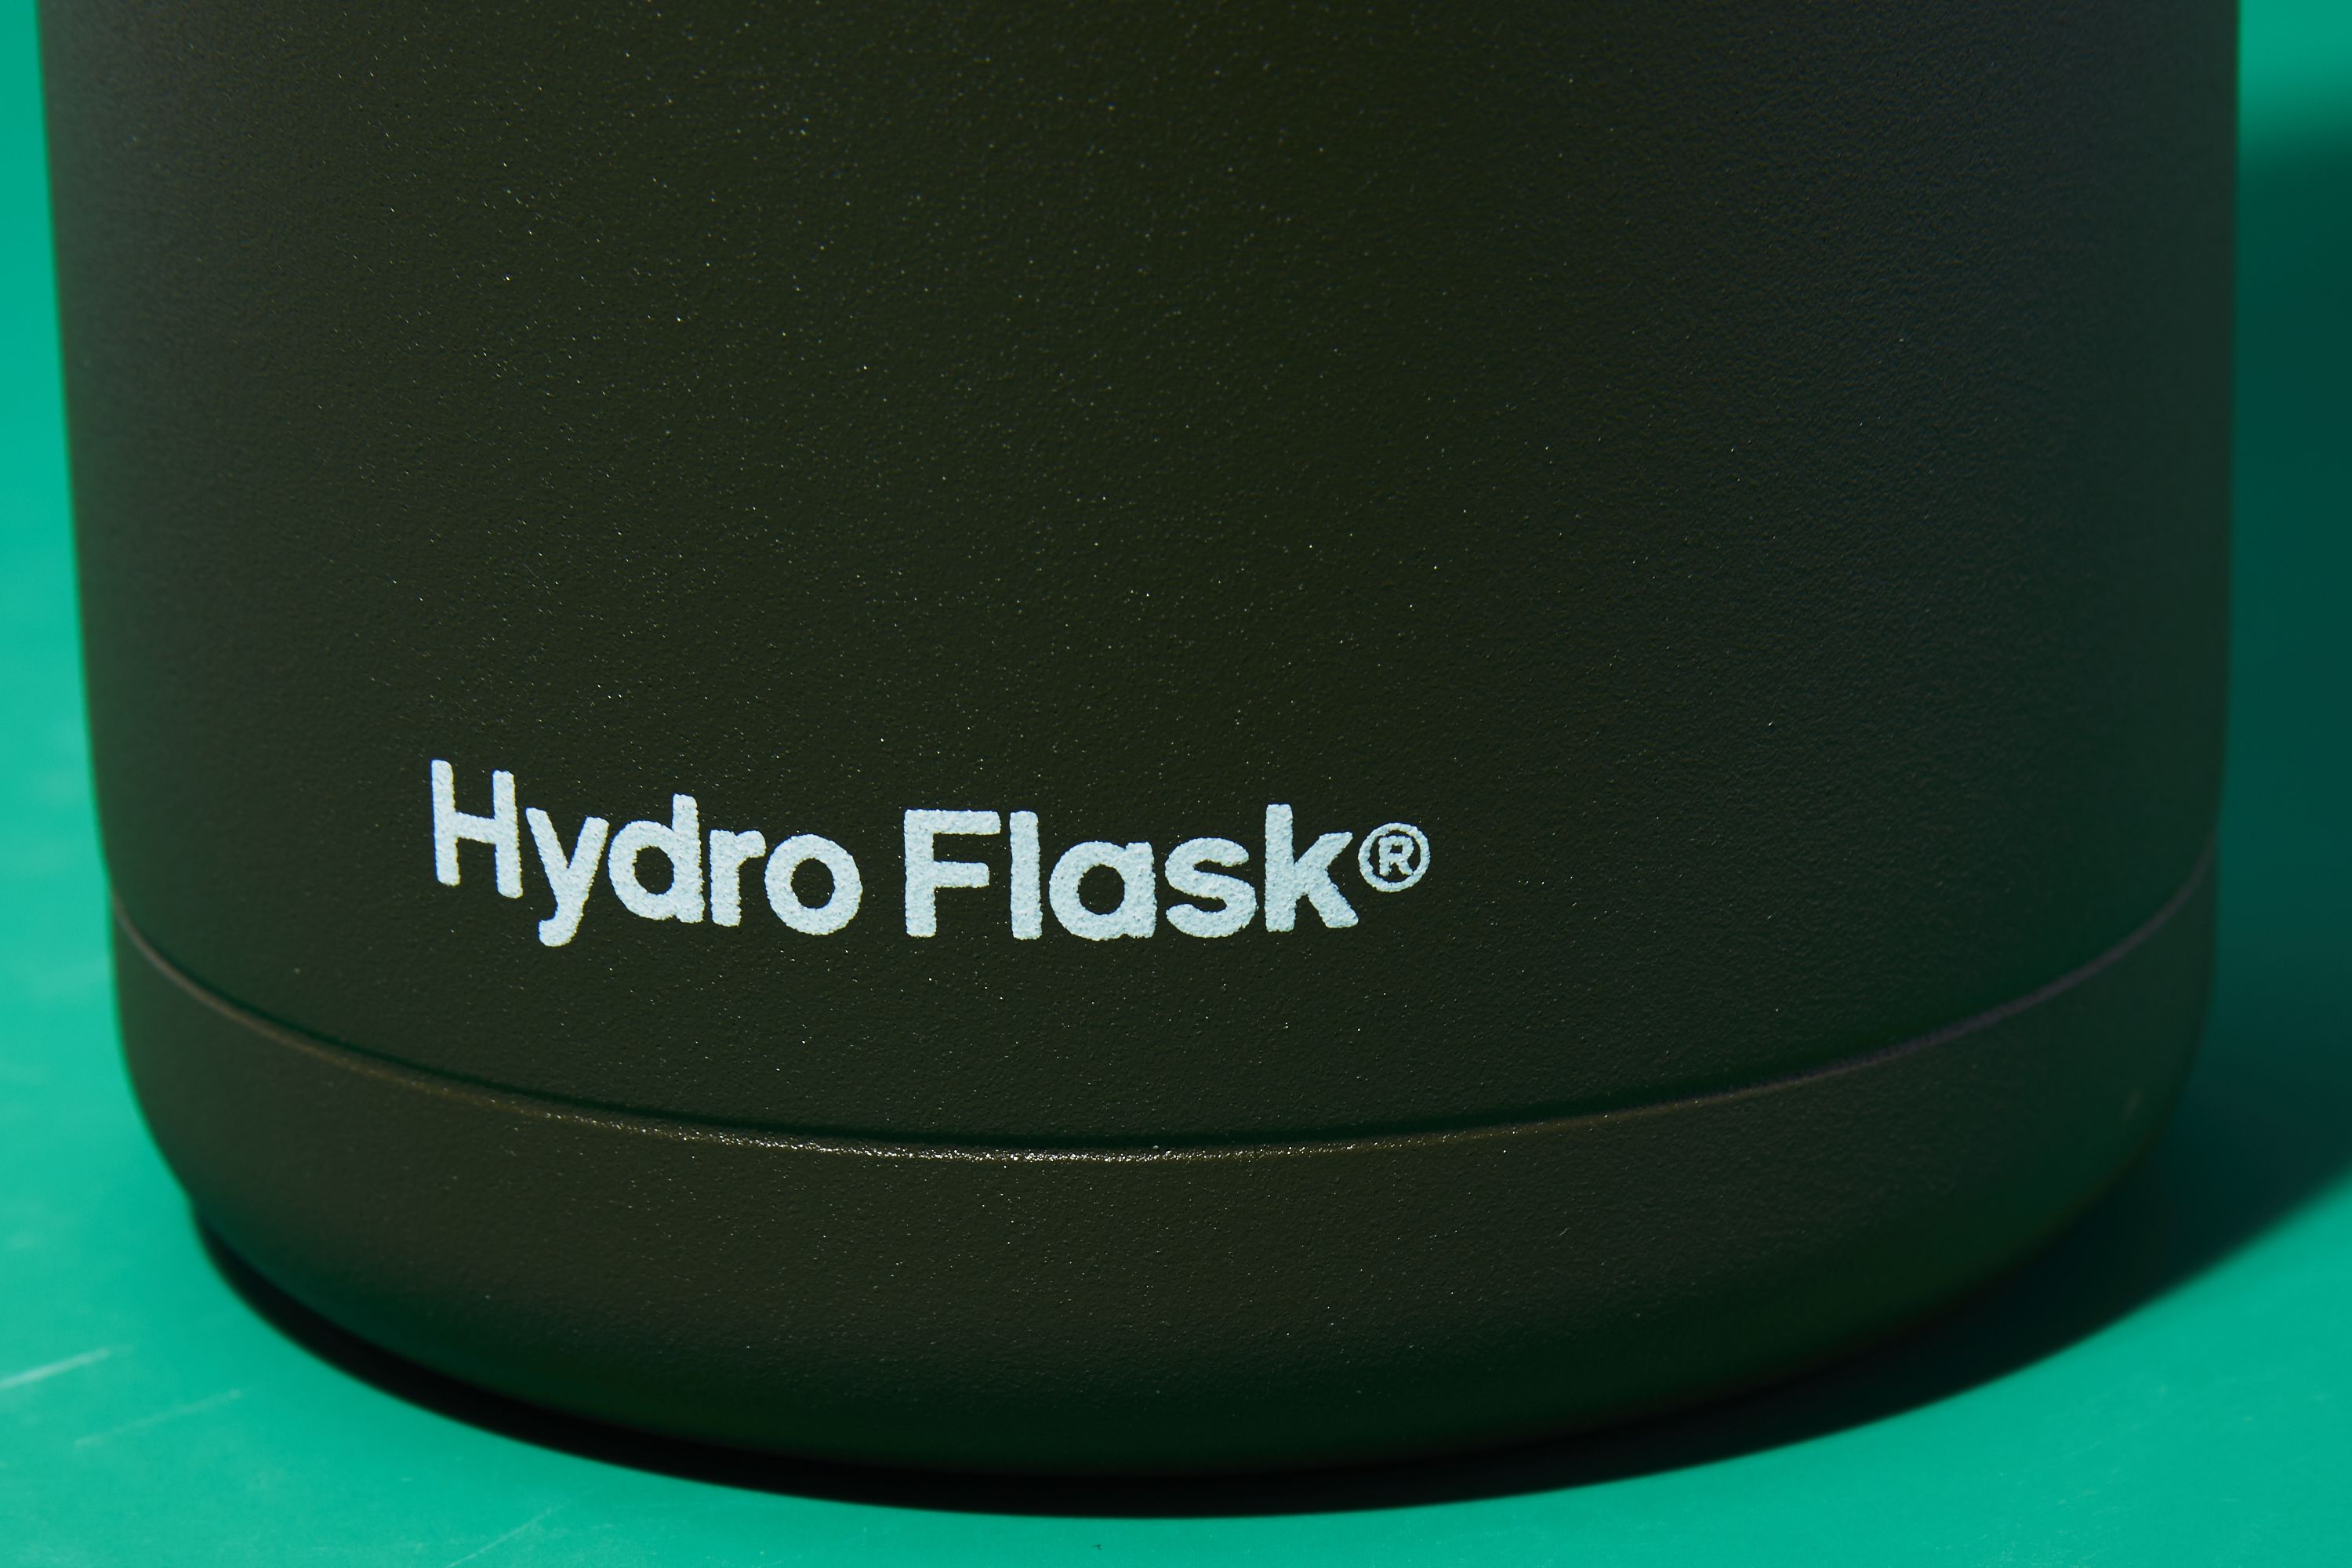 Hydro Flask 64 oz Growler Reviews - Trailspace